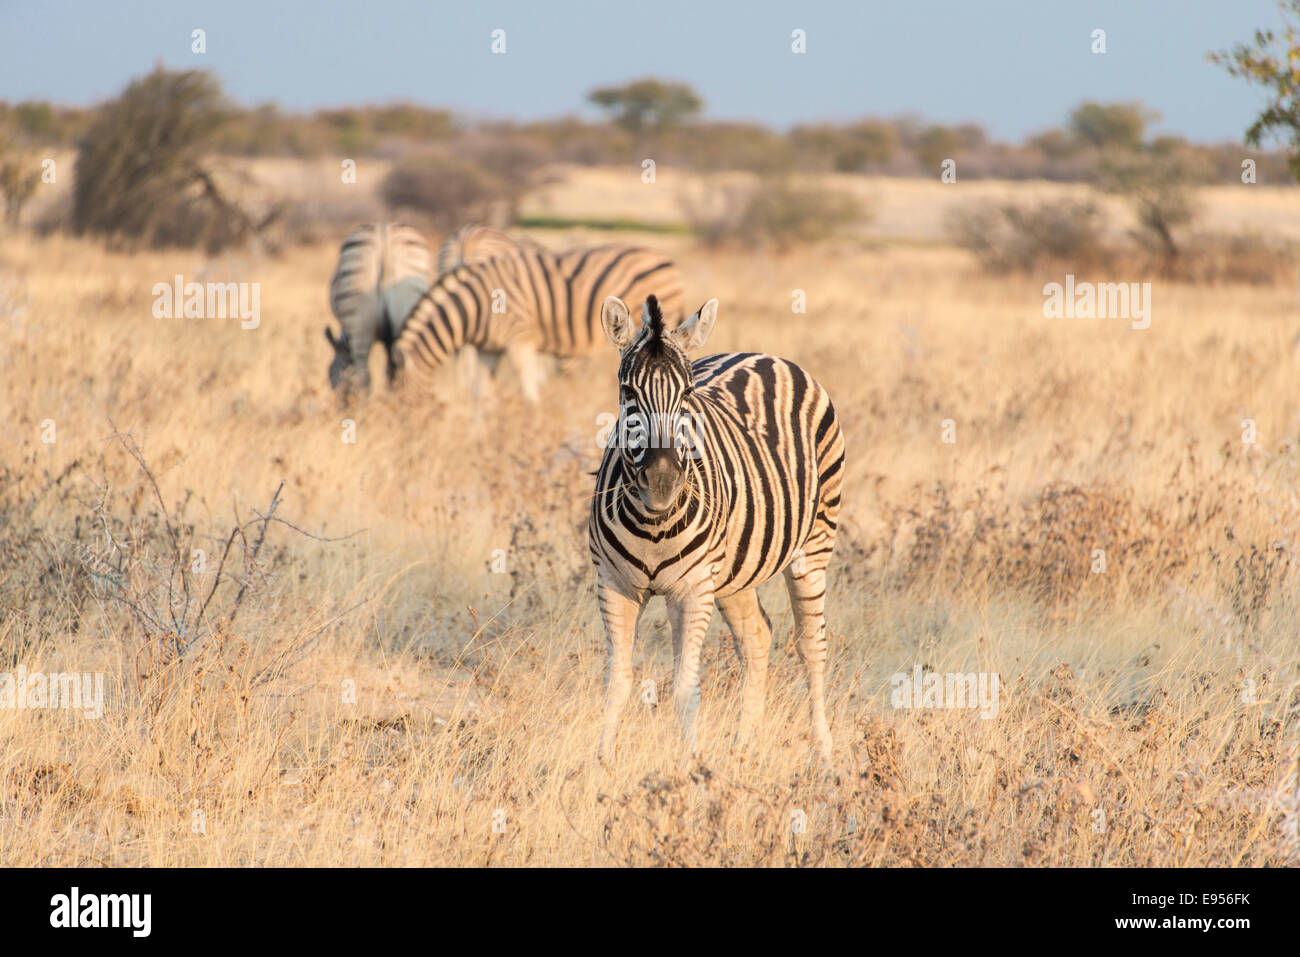 Plains Zebras or Burchell's Zebras (Equus burchelli), Etosha National Park, Namibia Stock Photo